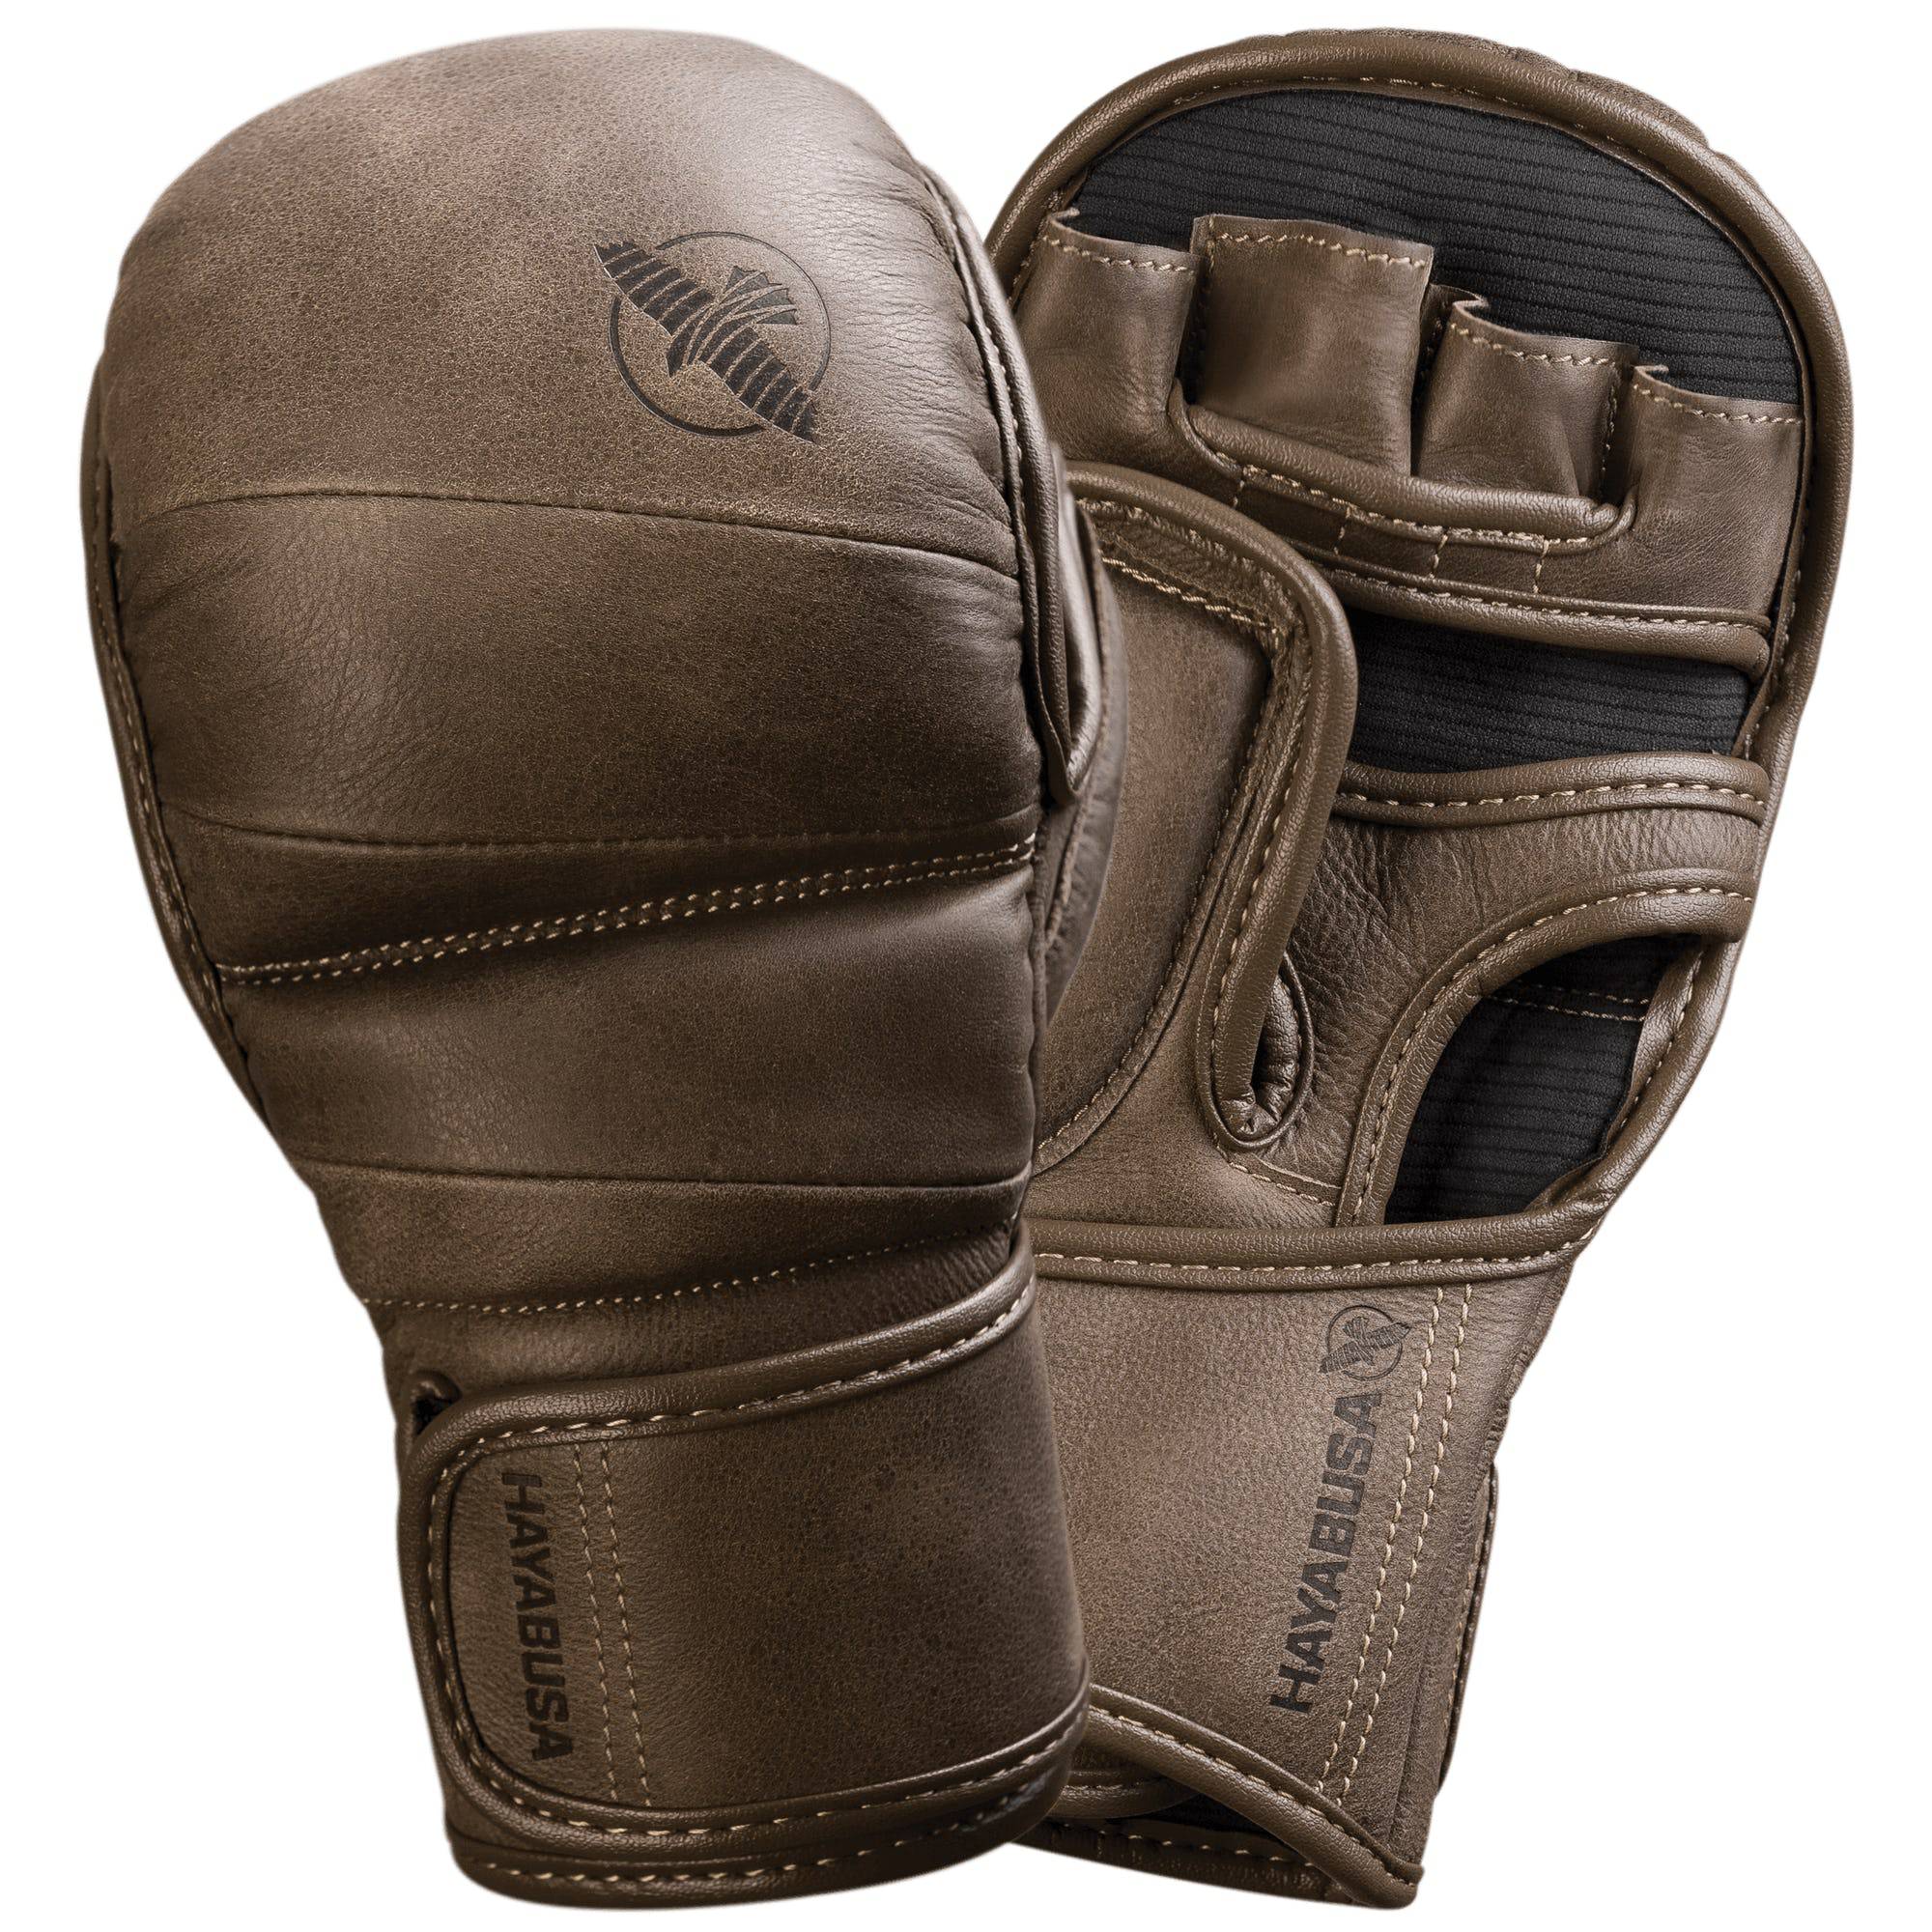 Hayabusa | Hybrid Gloves - T3 LX - 7oz - XTC Fitness - Exercise Equipment Superstore - Canada - Hybrid Gloves